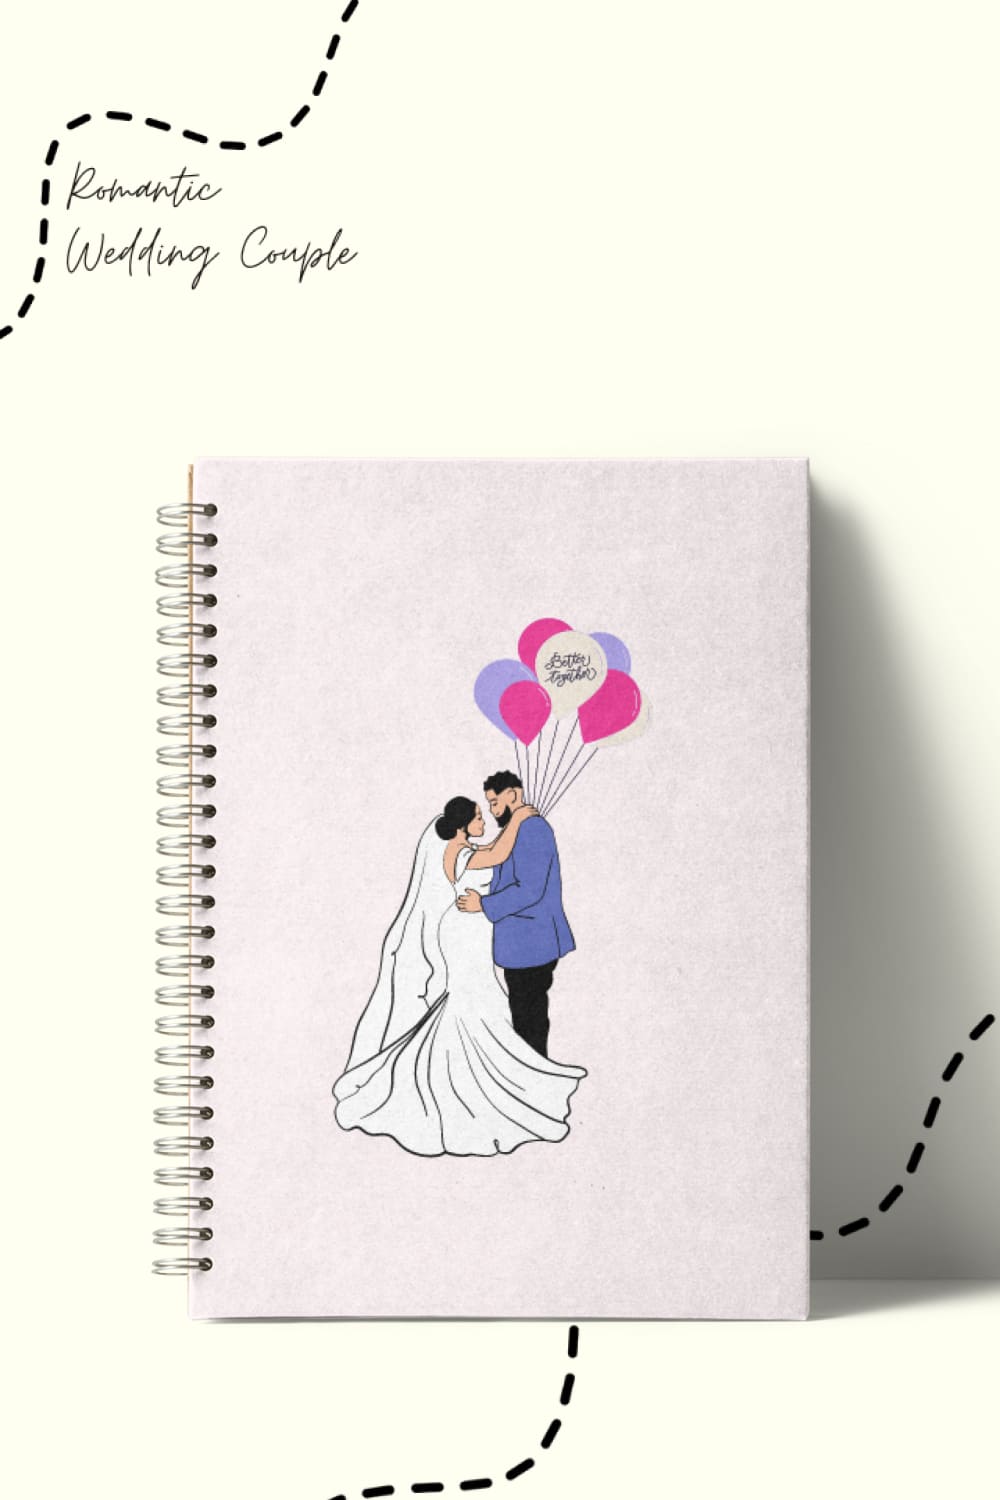 Romantic Wedding Couple - Pinterest.